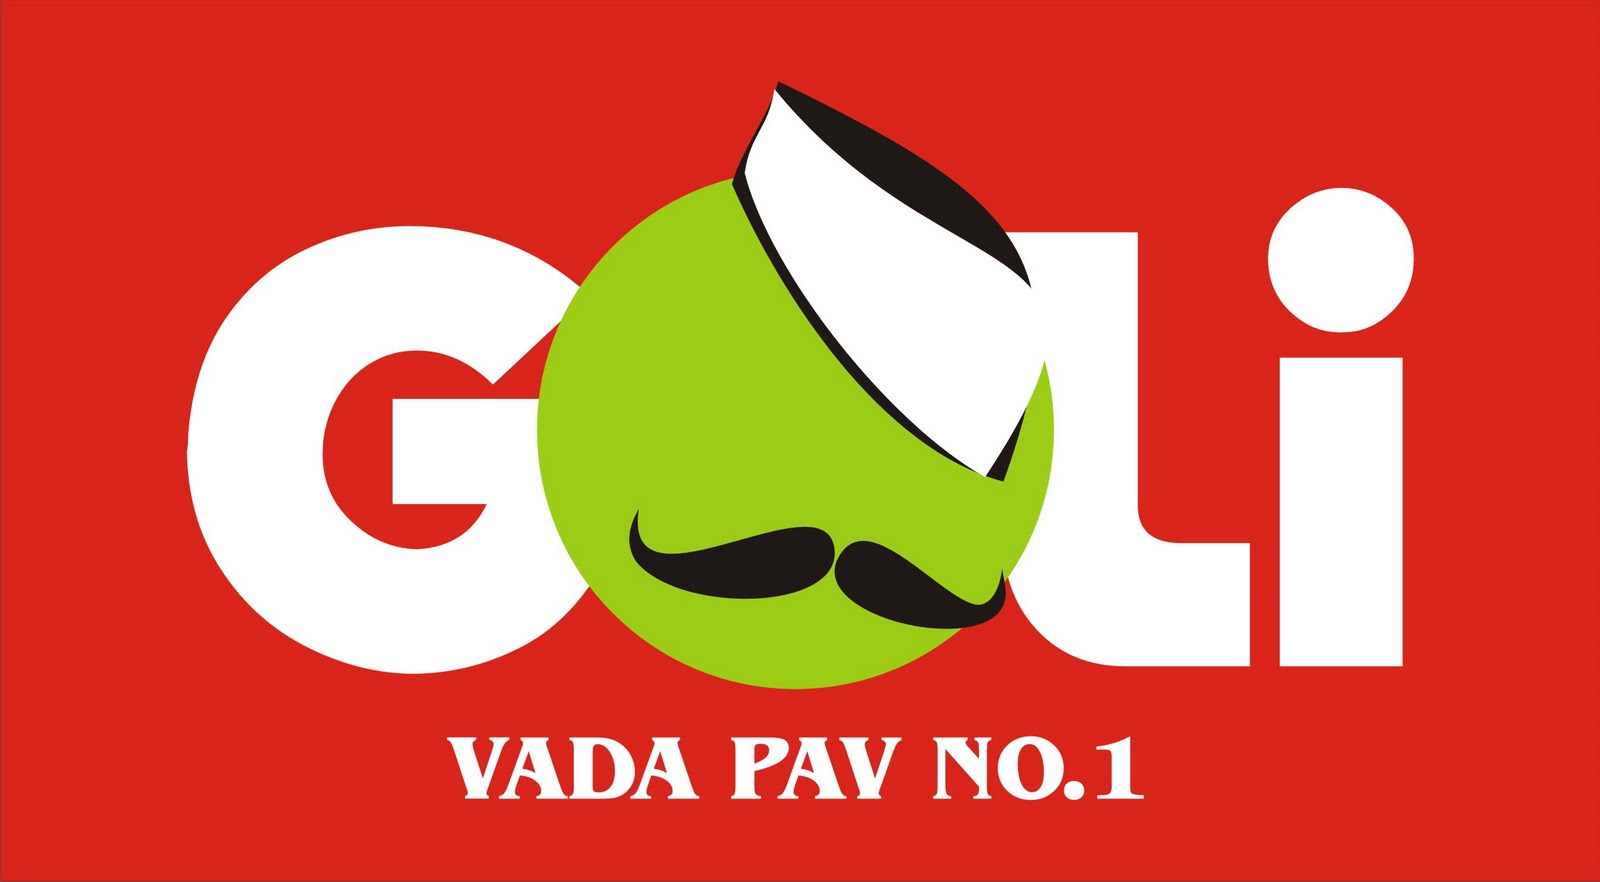 Goli_vada_pav_logo